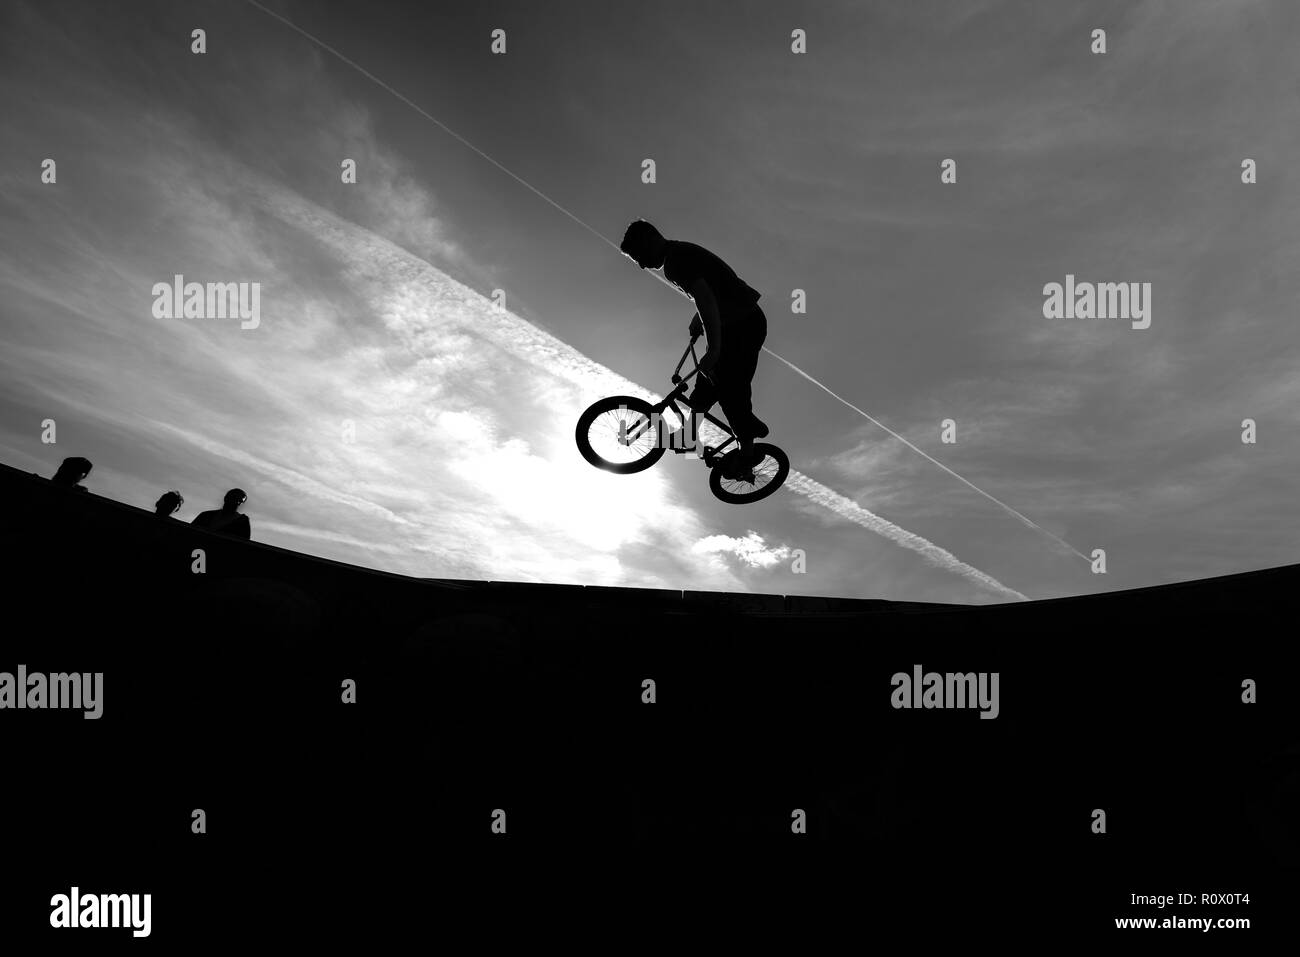 Bmx trick Black and White Stock Photos & Images - Alamy